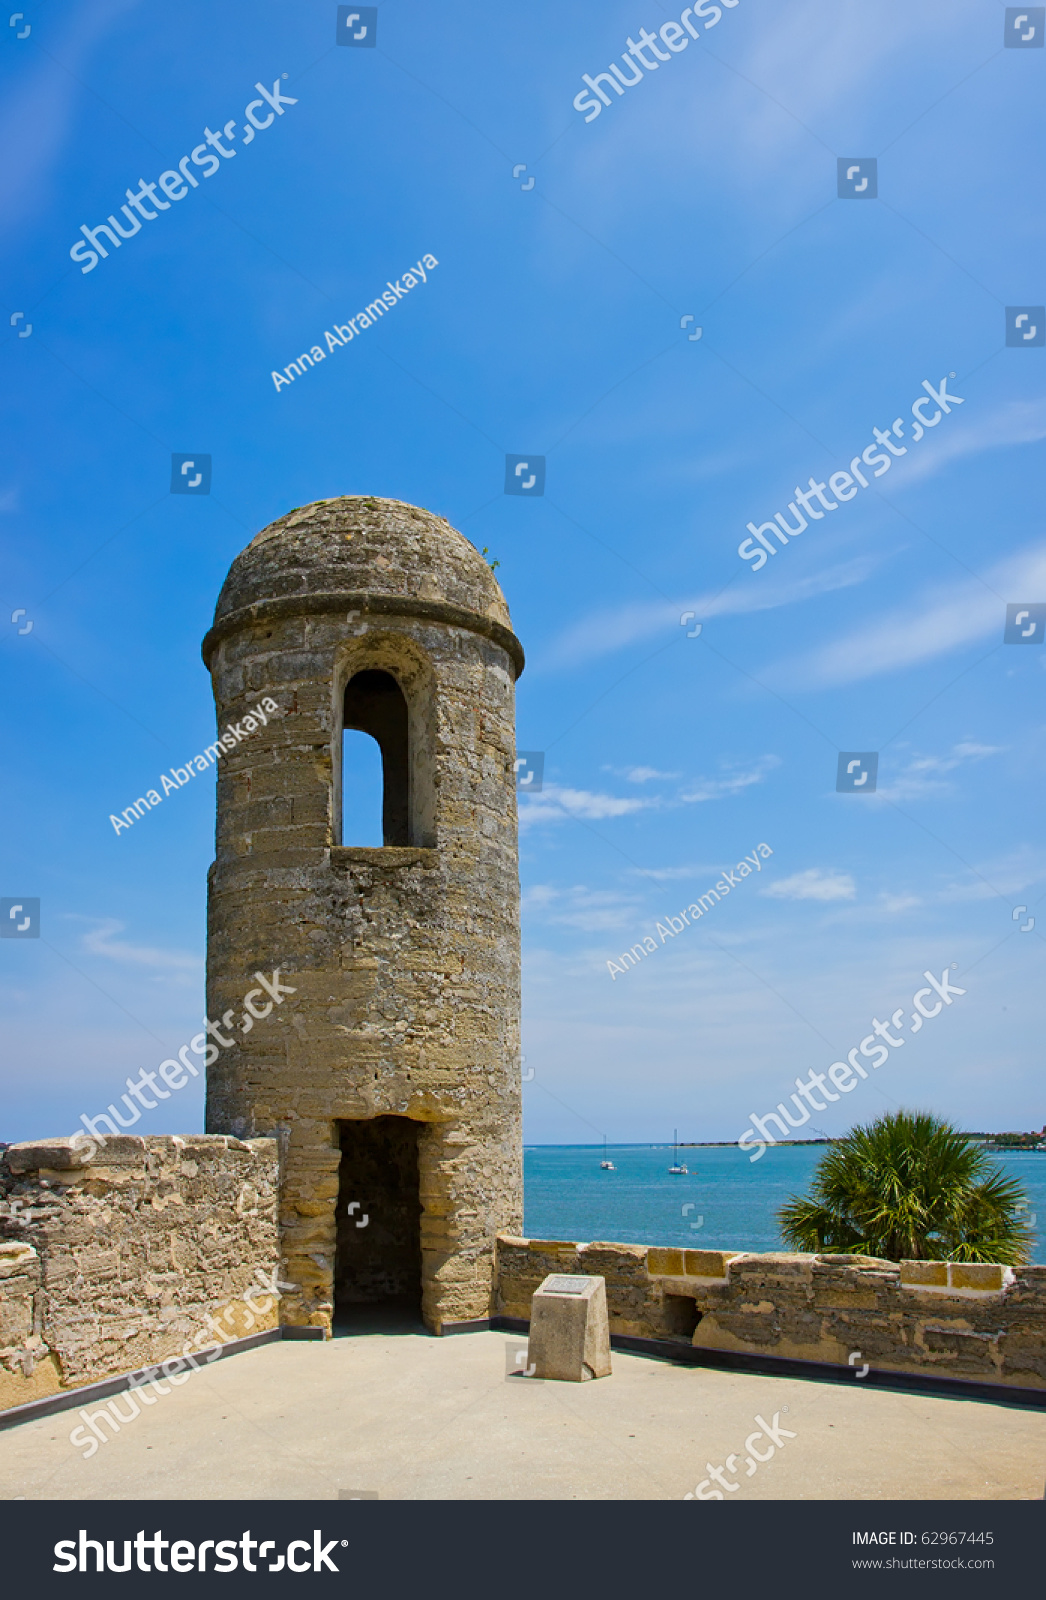 Castillo de San Marcos National Monument in St. Augustine, Florida #62967445